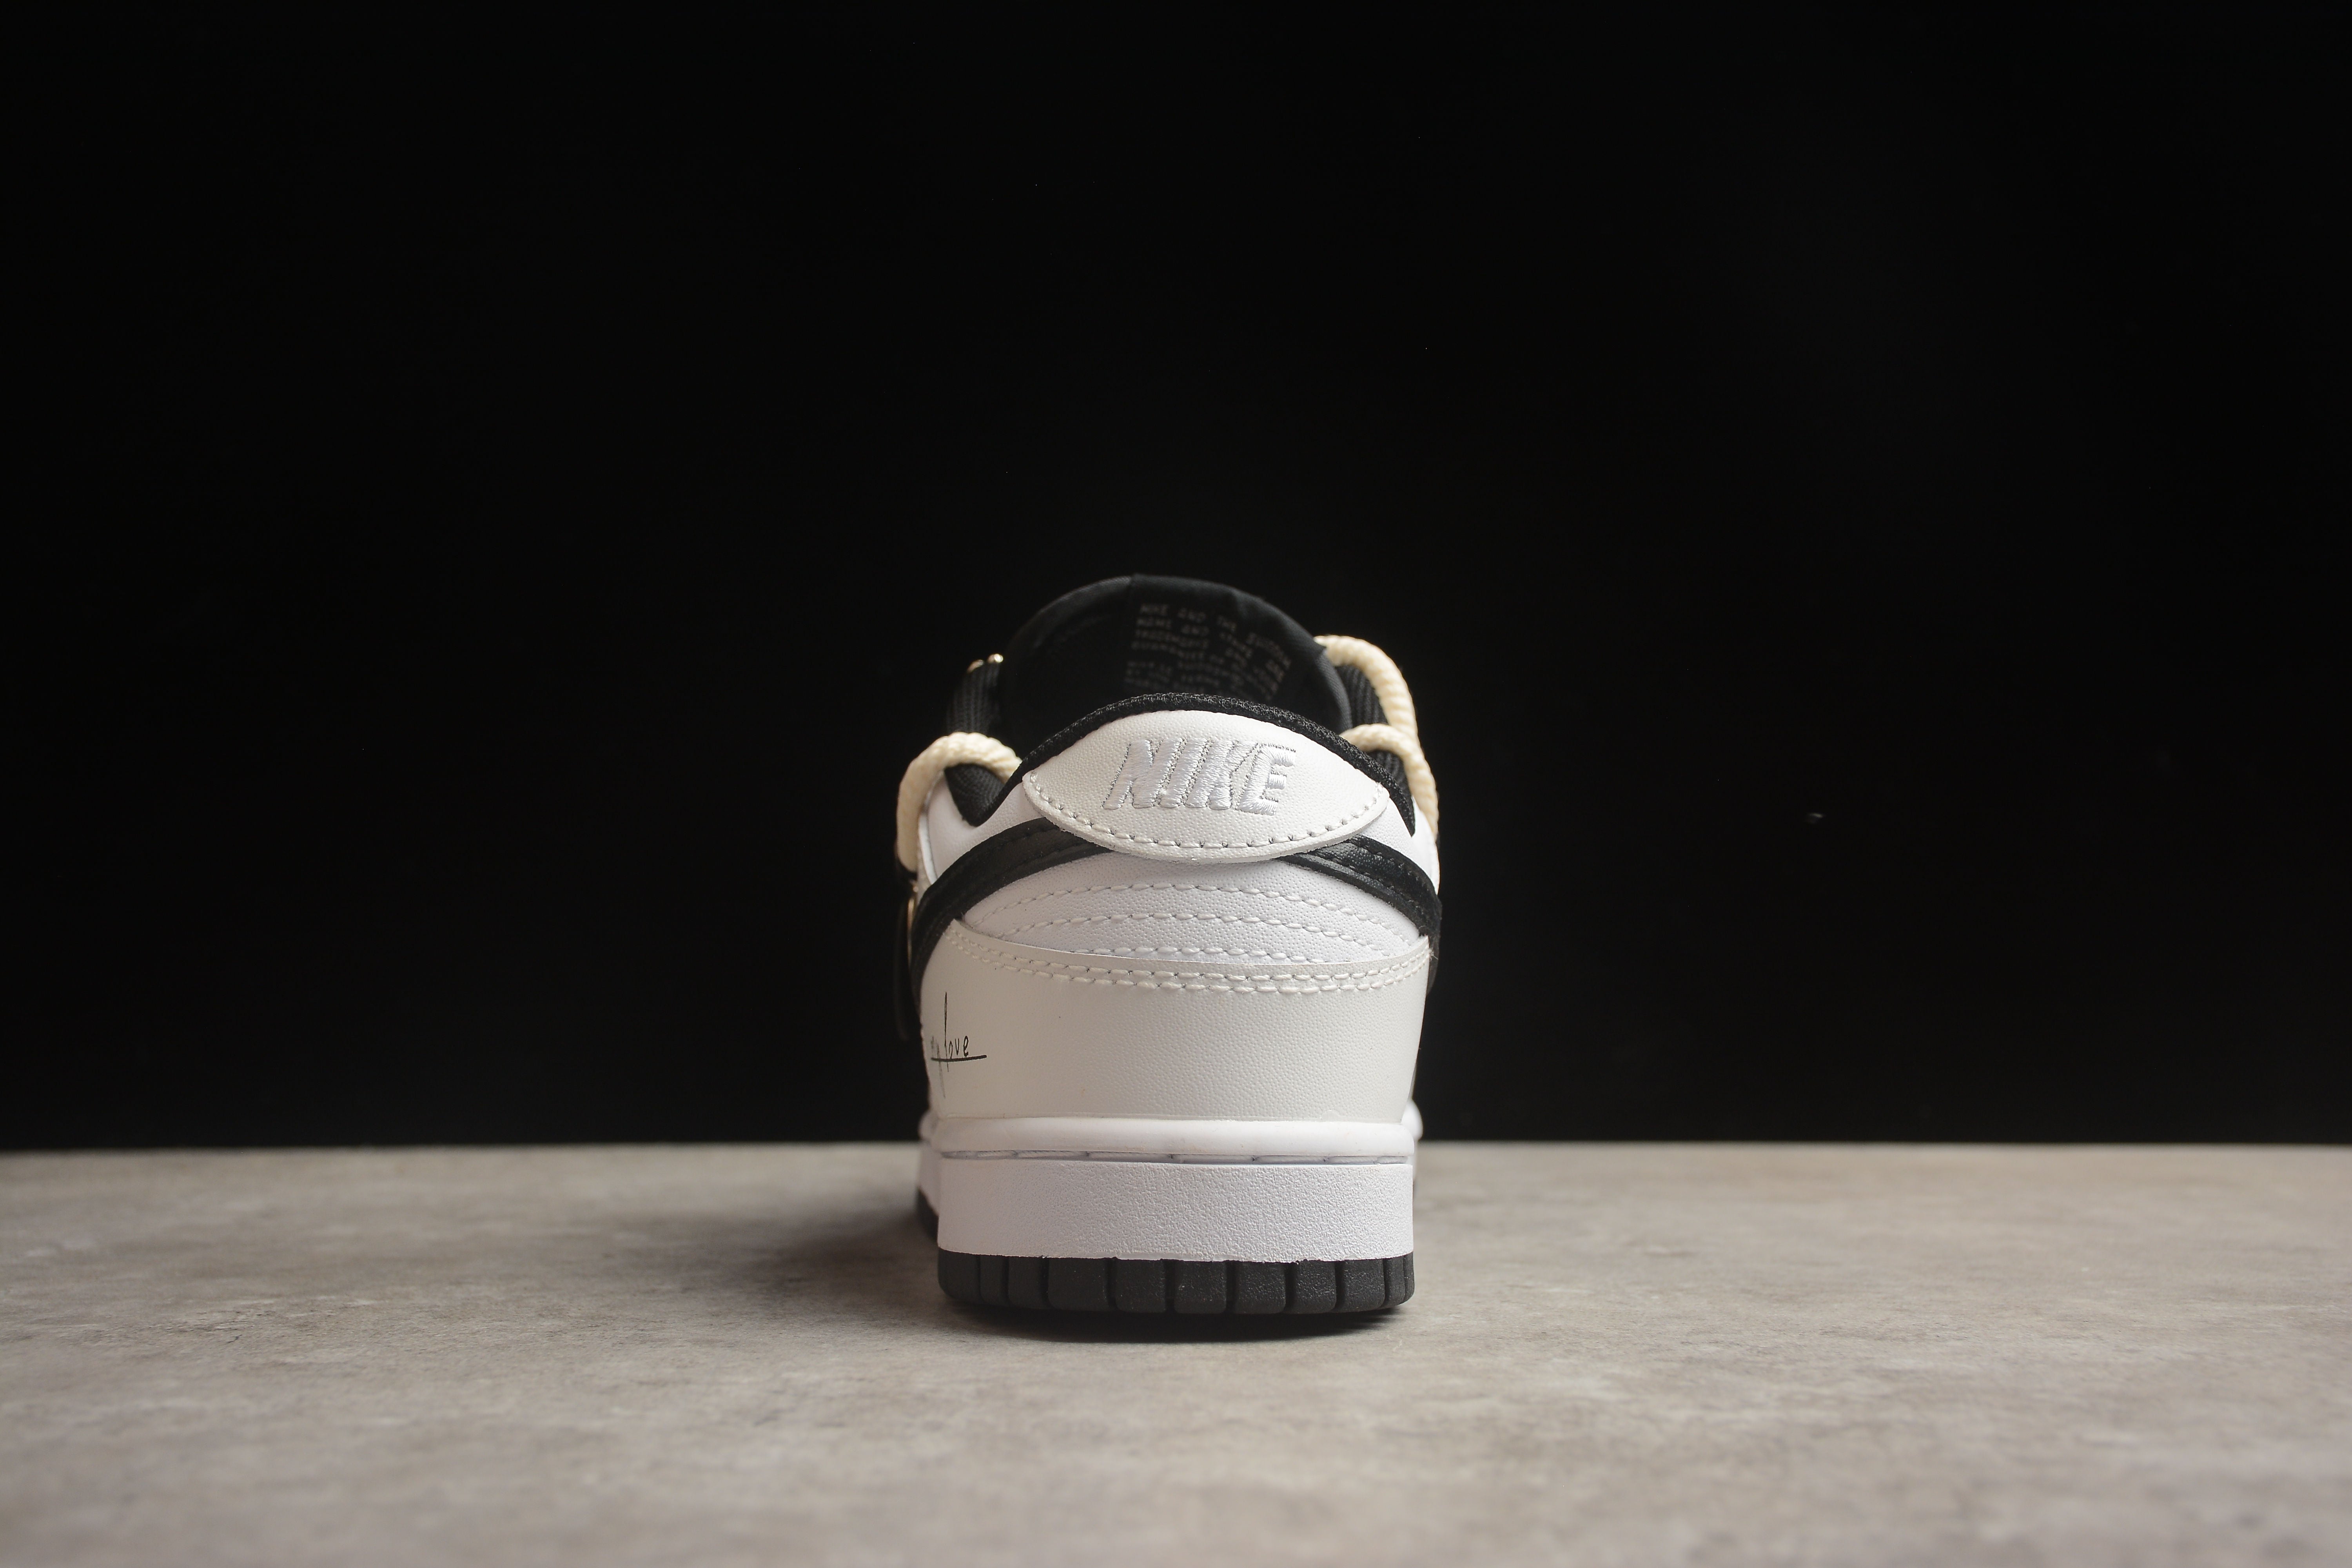 Nike SB dunk low retro black and white shoes